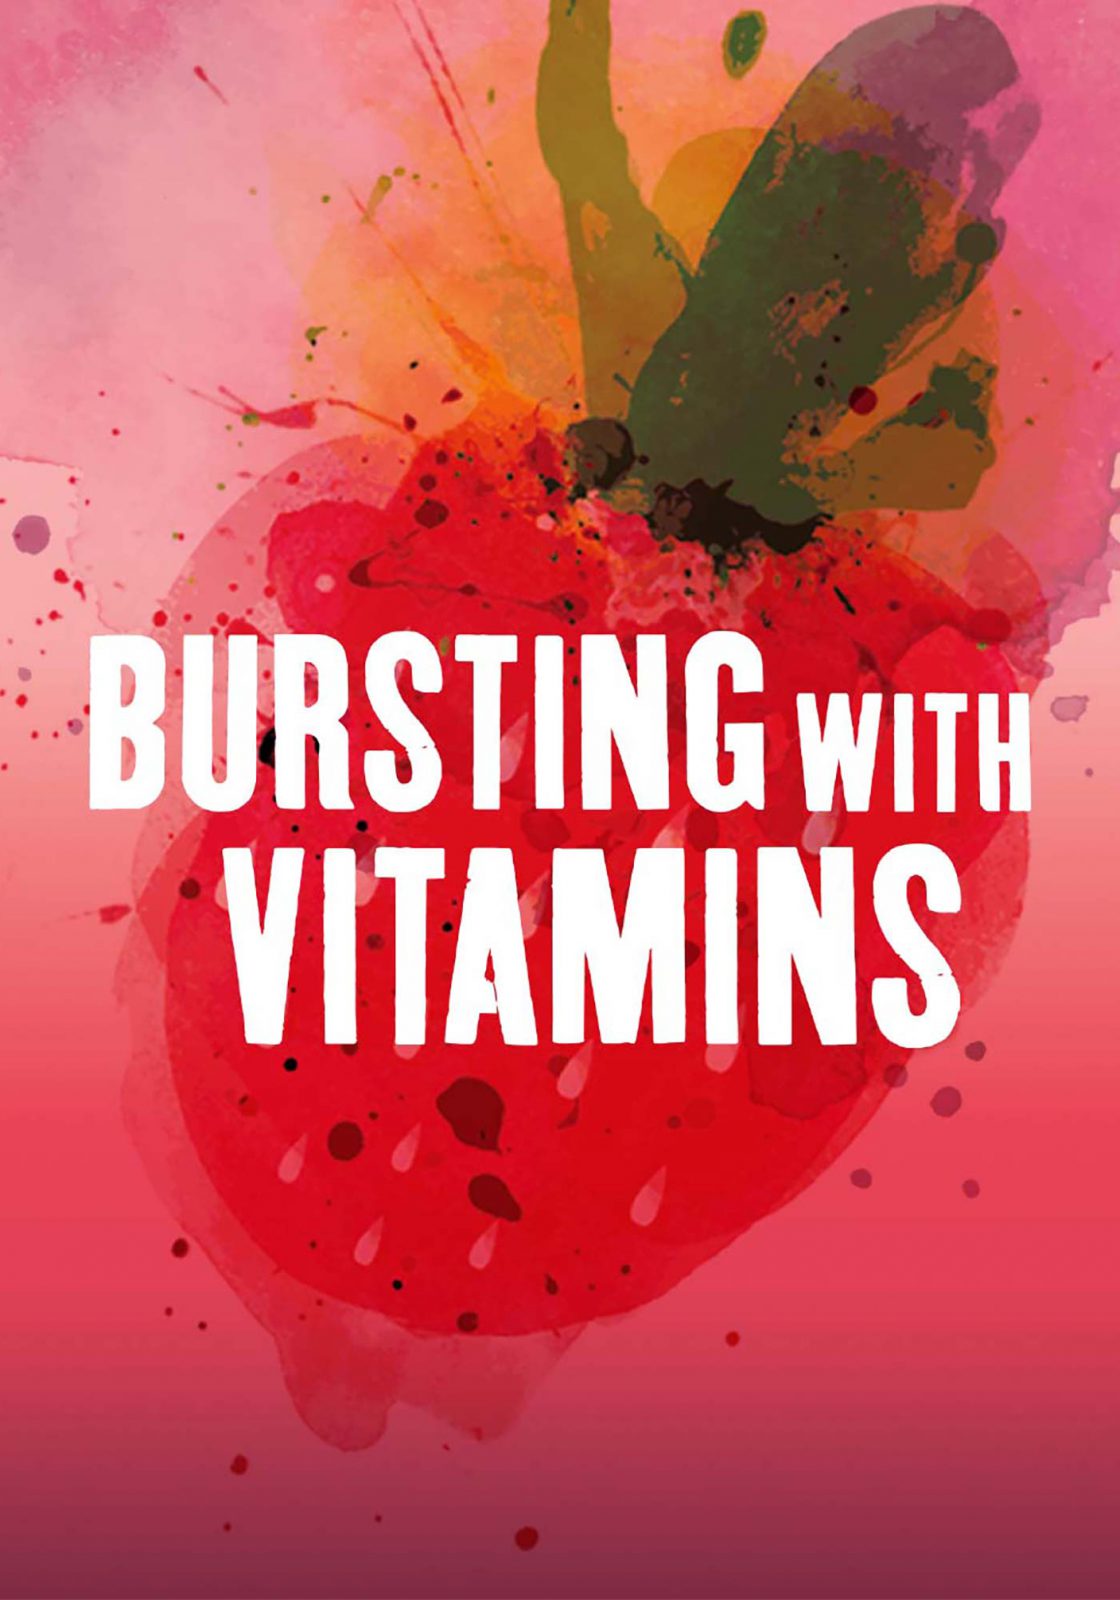 B.fresh Bursting With Vitamins